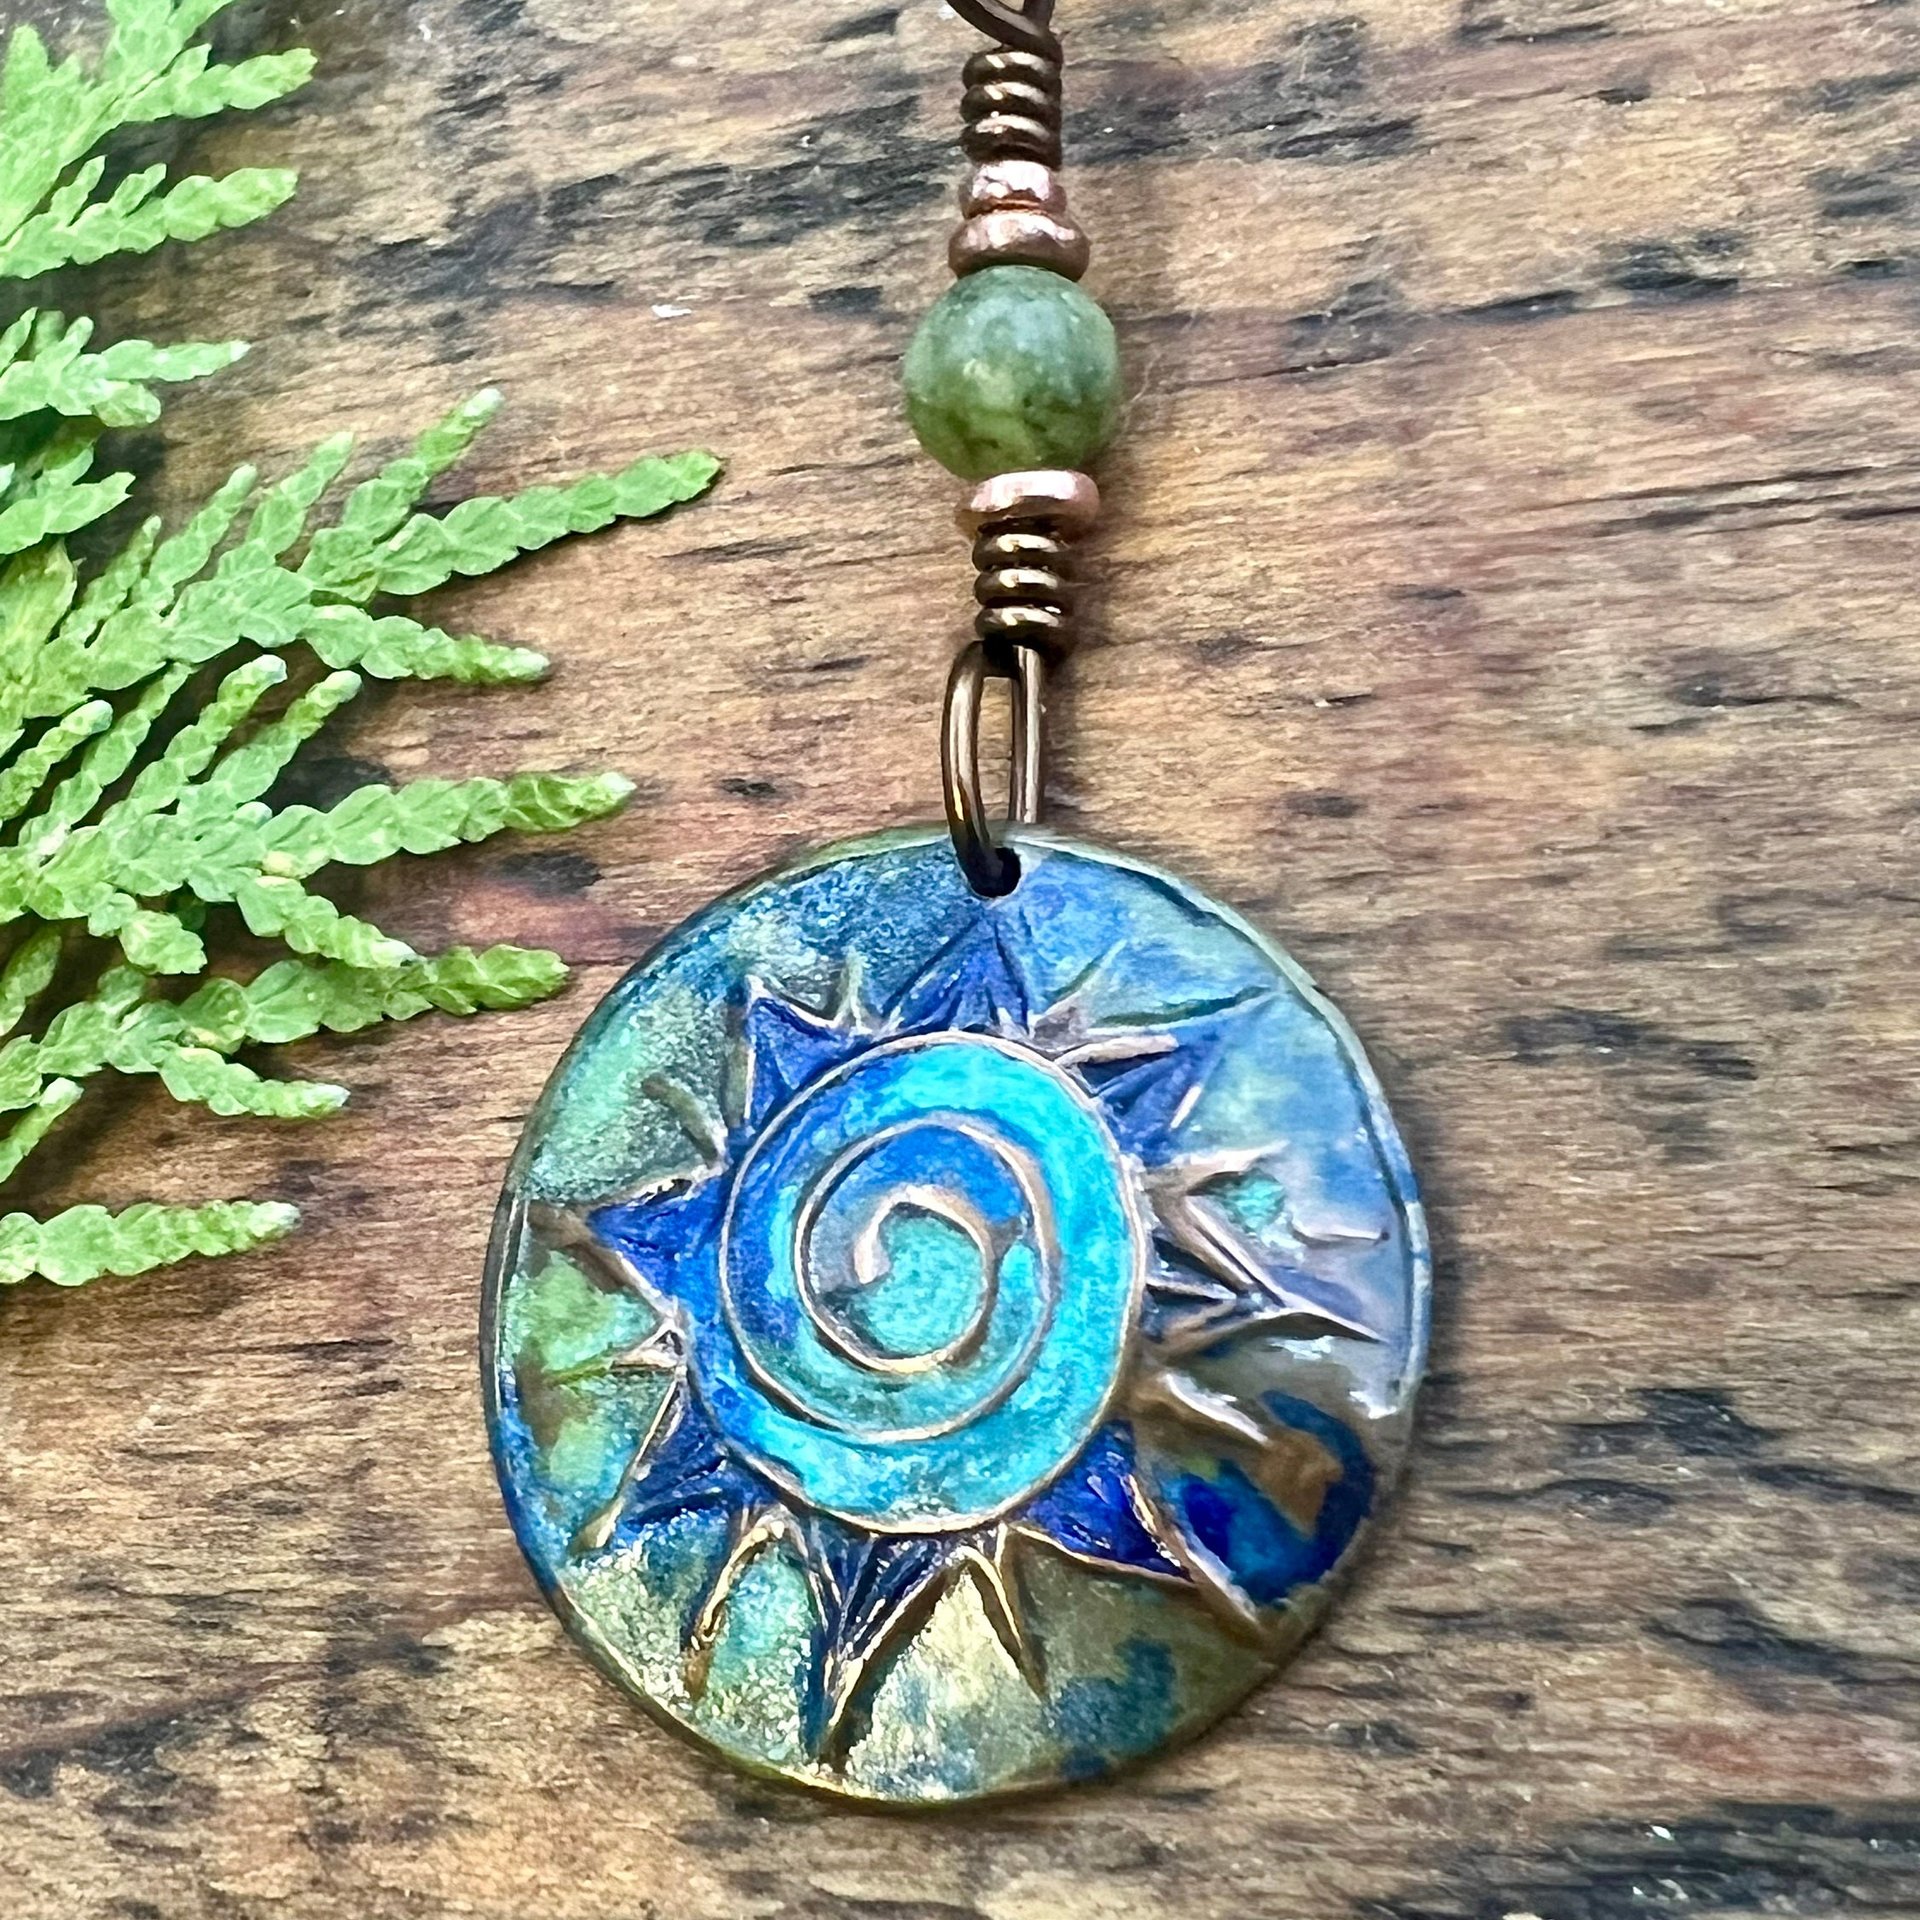 Celtic Sun Spiral Necklace, Copper Patina Pendant, Connemara Marble, Irish Celtic Spirals, Colorful Sun, Blue Green, Pagan Celtic Witch Gift